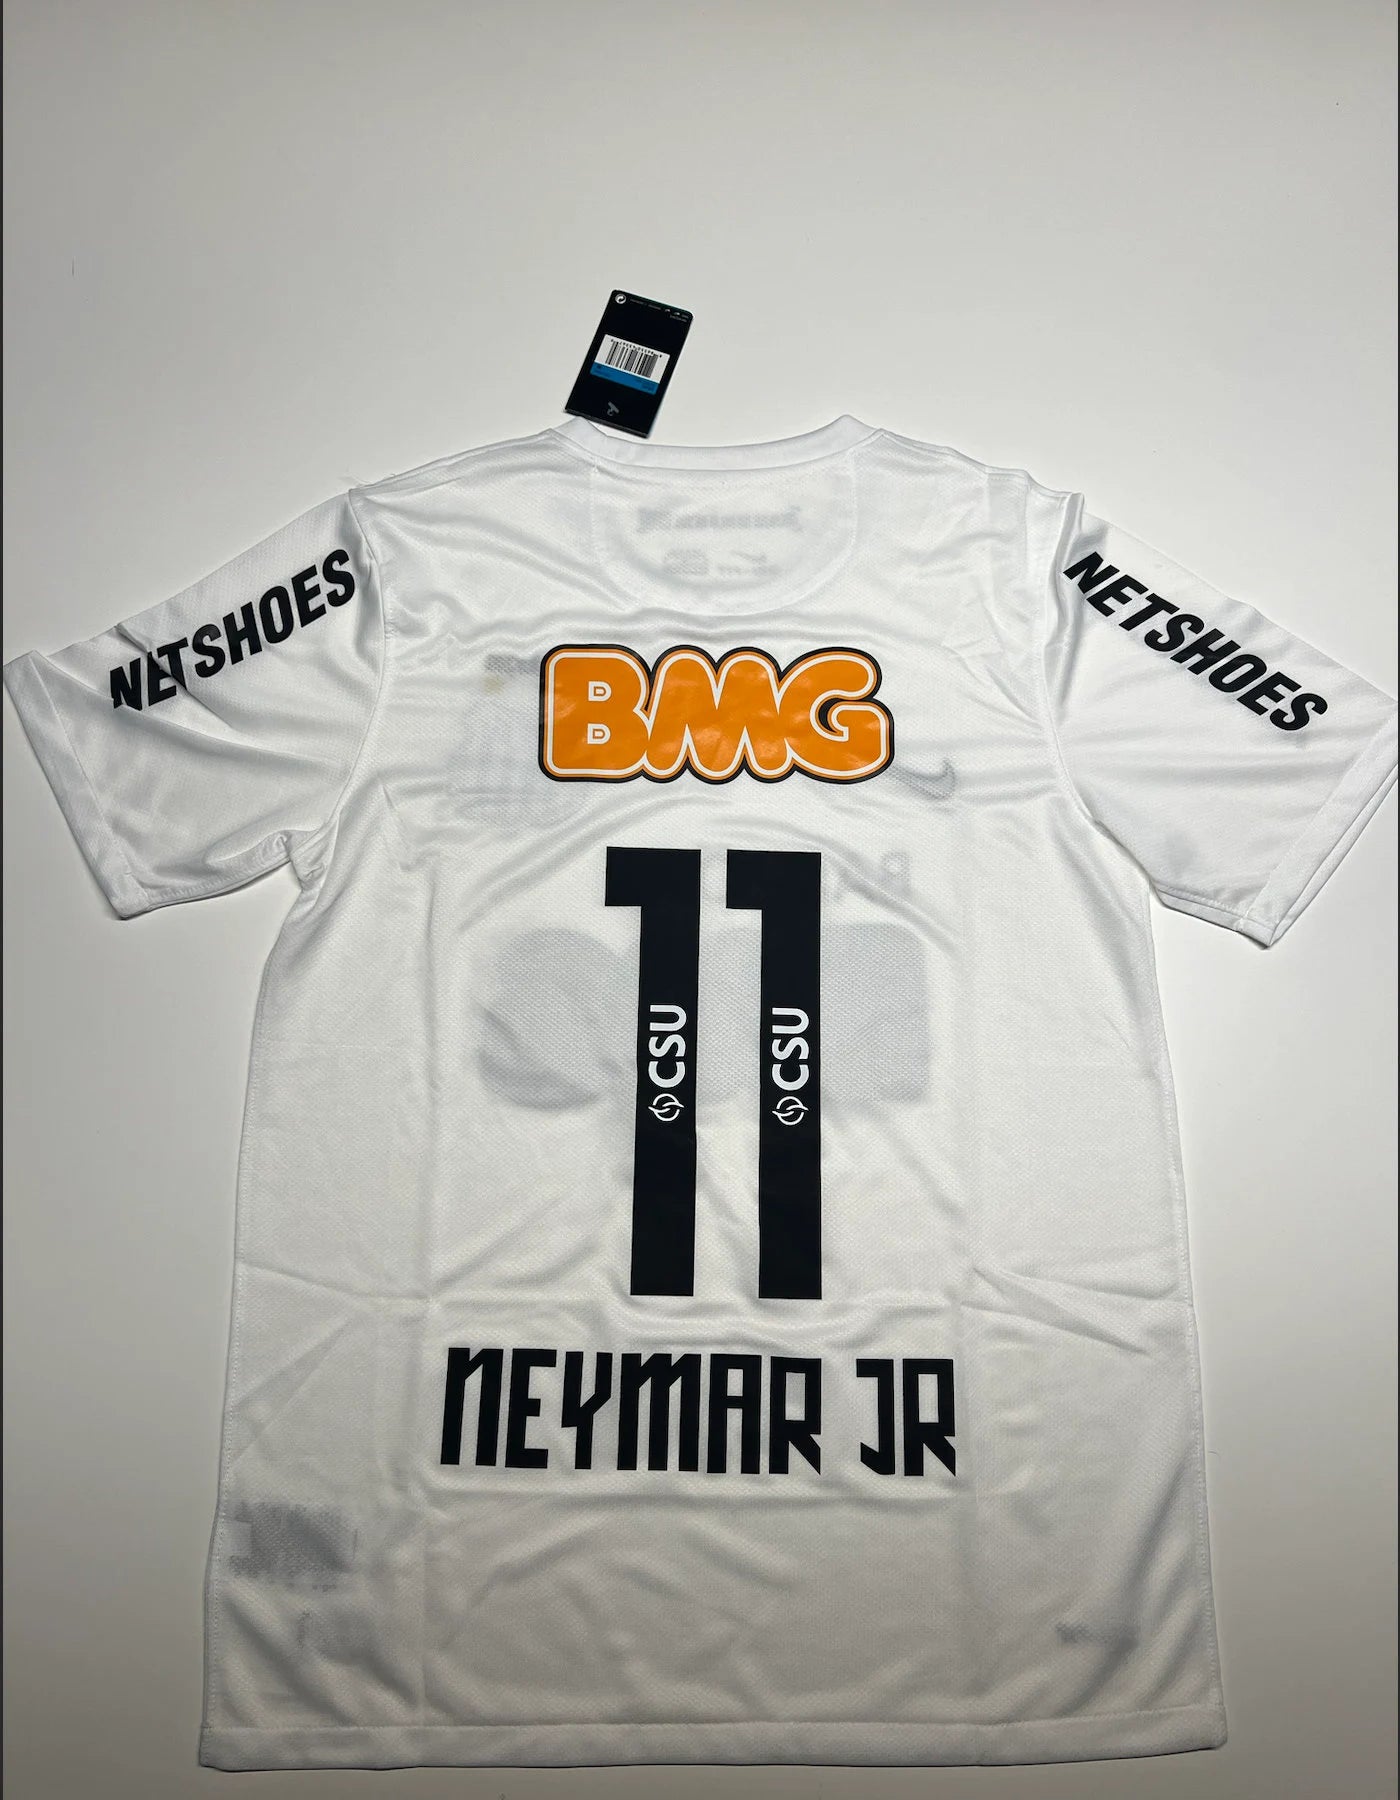 Neymar Jr Santos FC 2011/12 Season Home Kit Nike Classic Iconic Authentic Fan Version Soccer Jersey - White